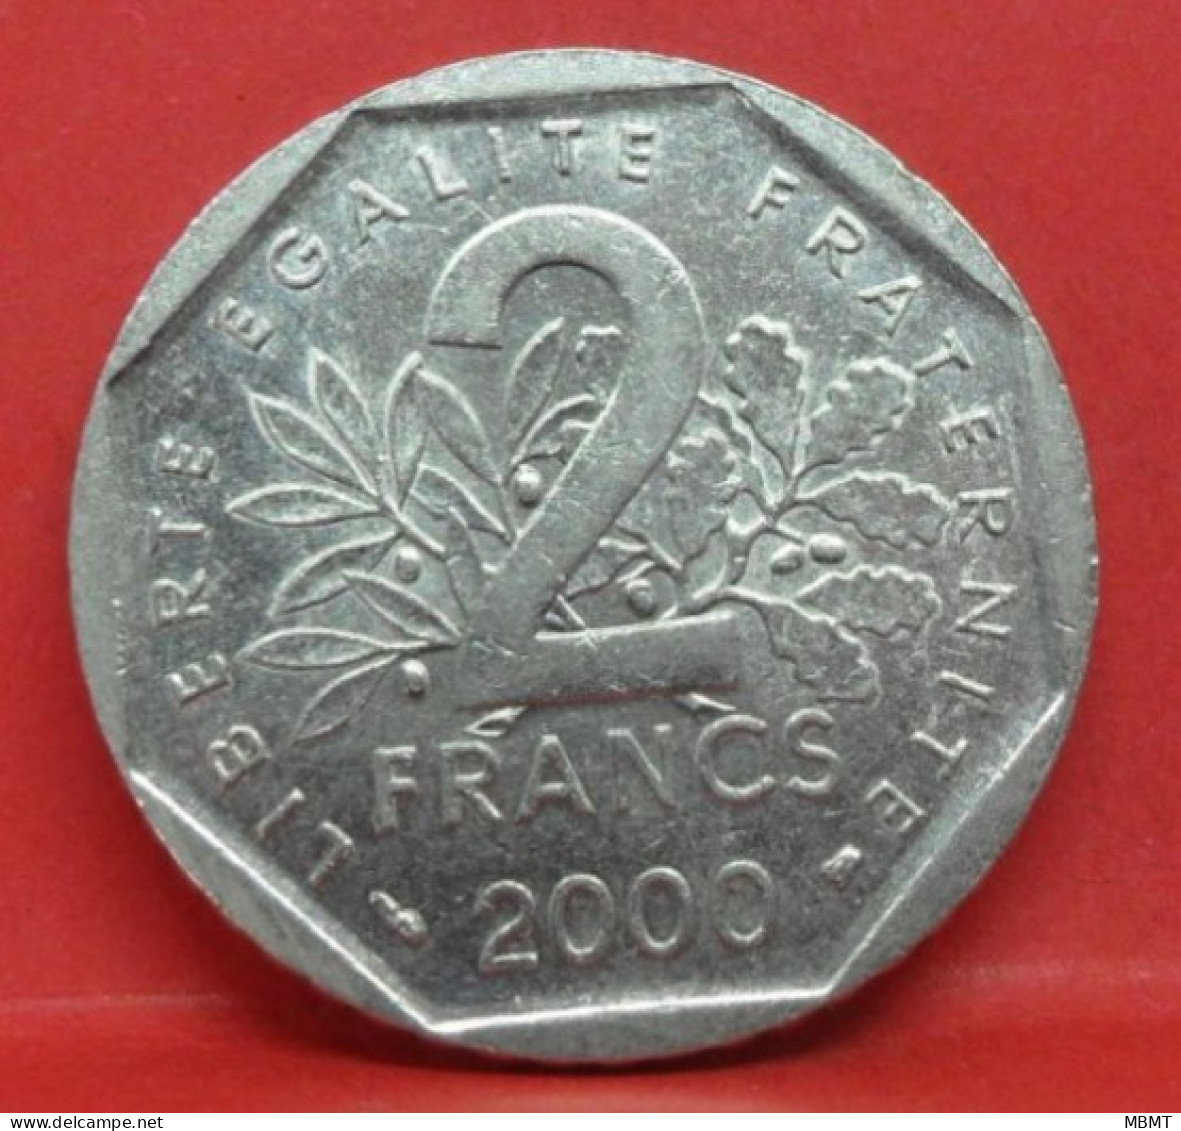 2 Francs Semeuse 2000 - TTB - Pièce Monnaie France - Article N°814 - 2 Francs